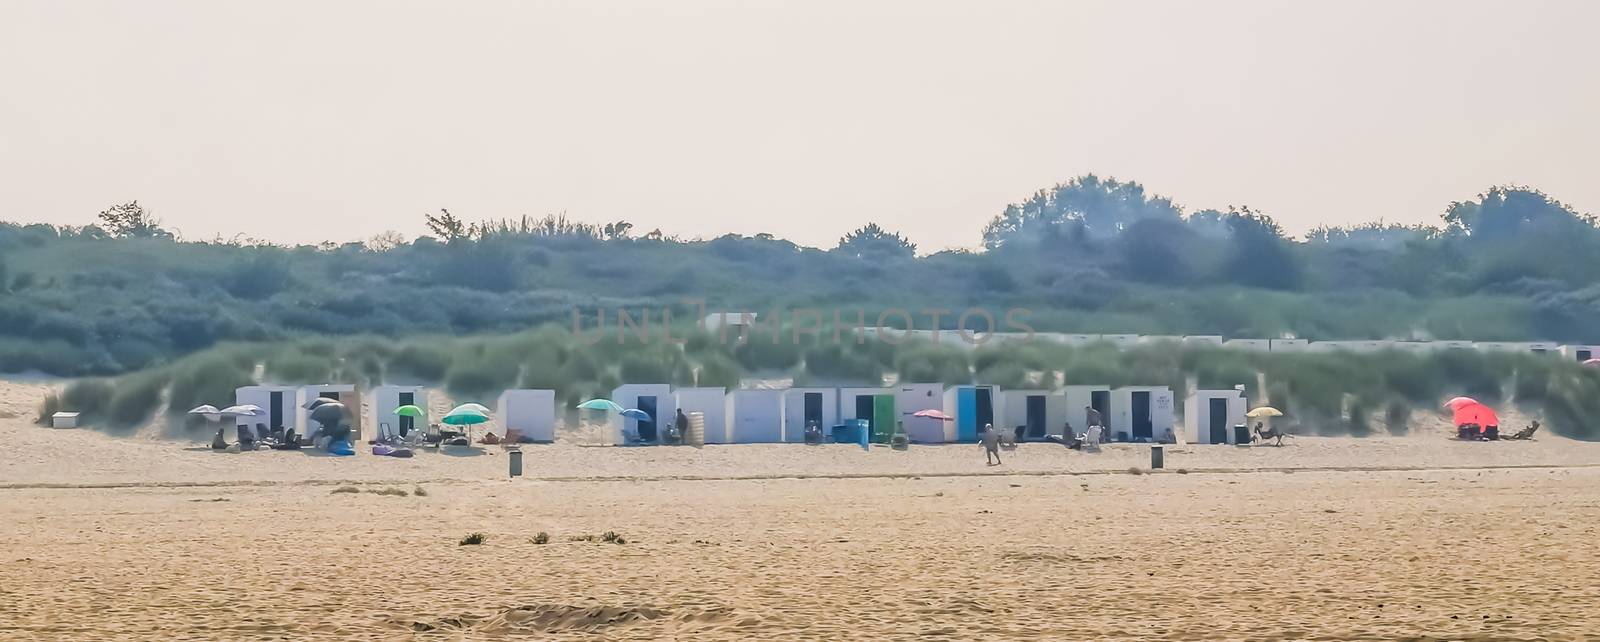 beach cottages at the coast of vrouwenpolder, Zeeland, The Netherlands by charlottebleijenberg